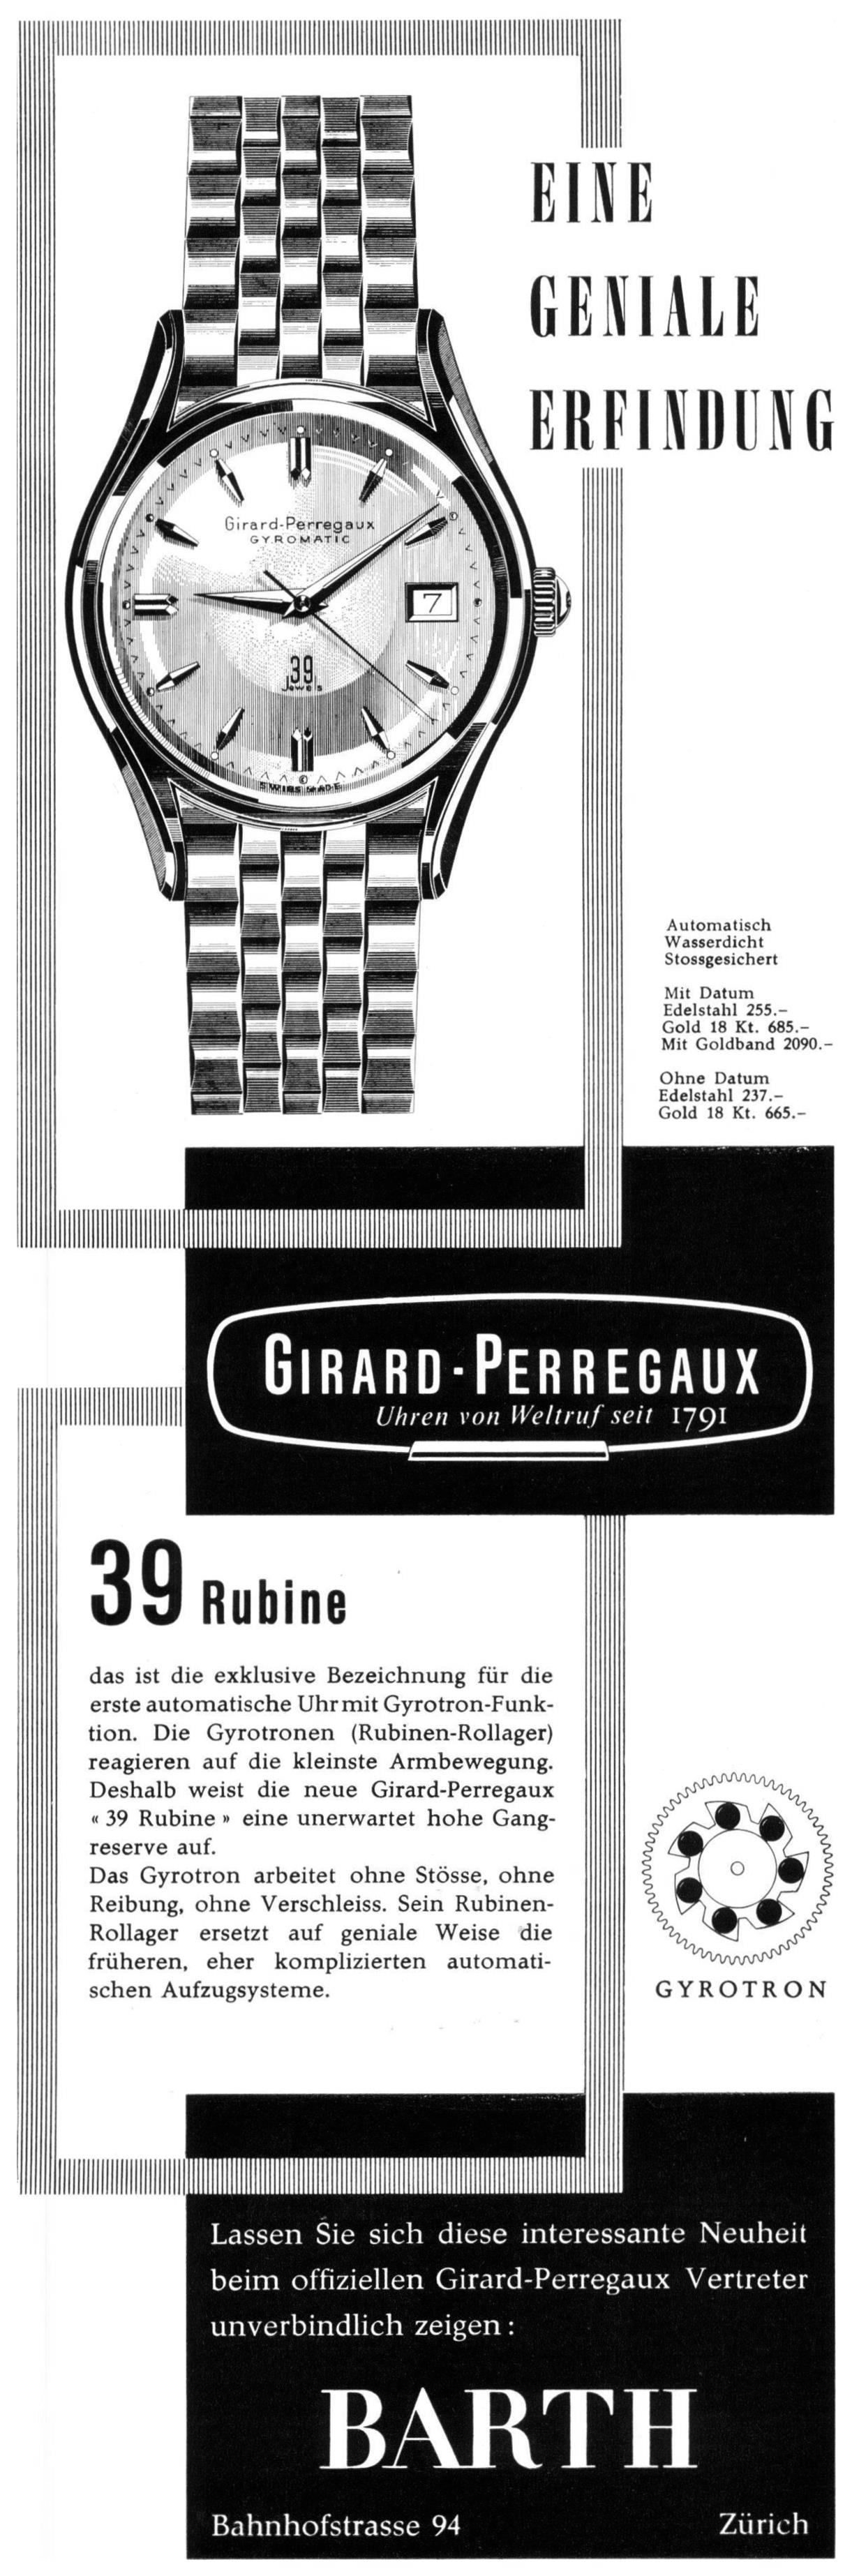 Girard-Perregaux 1960 65.jpg